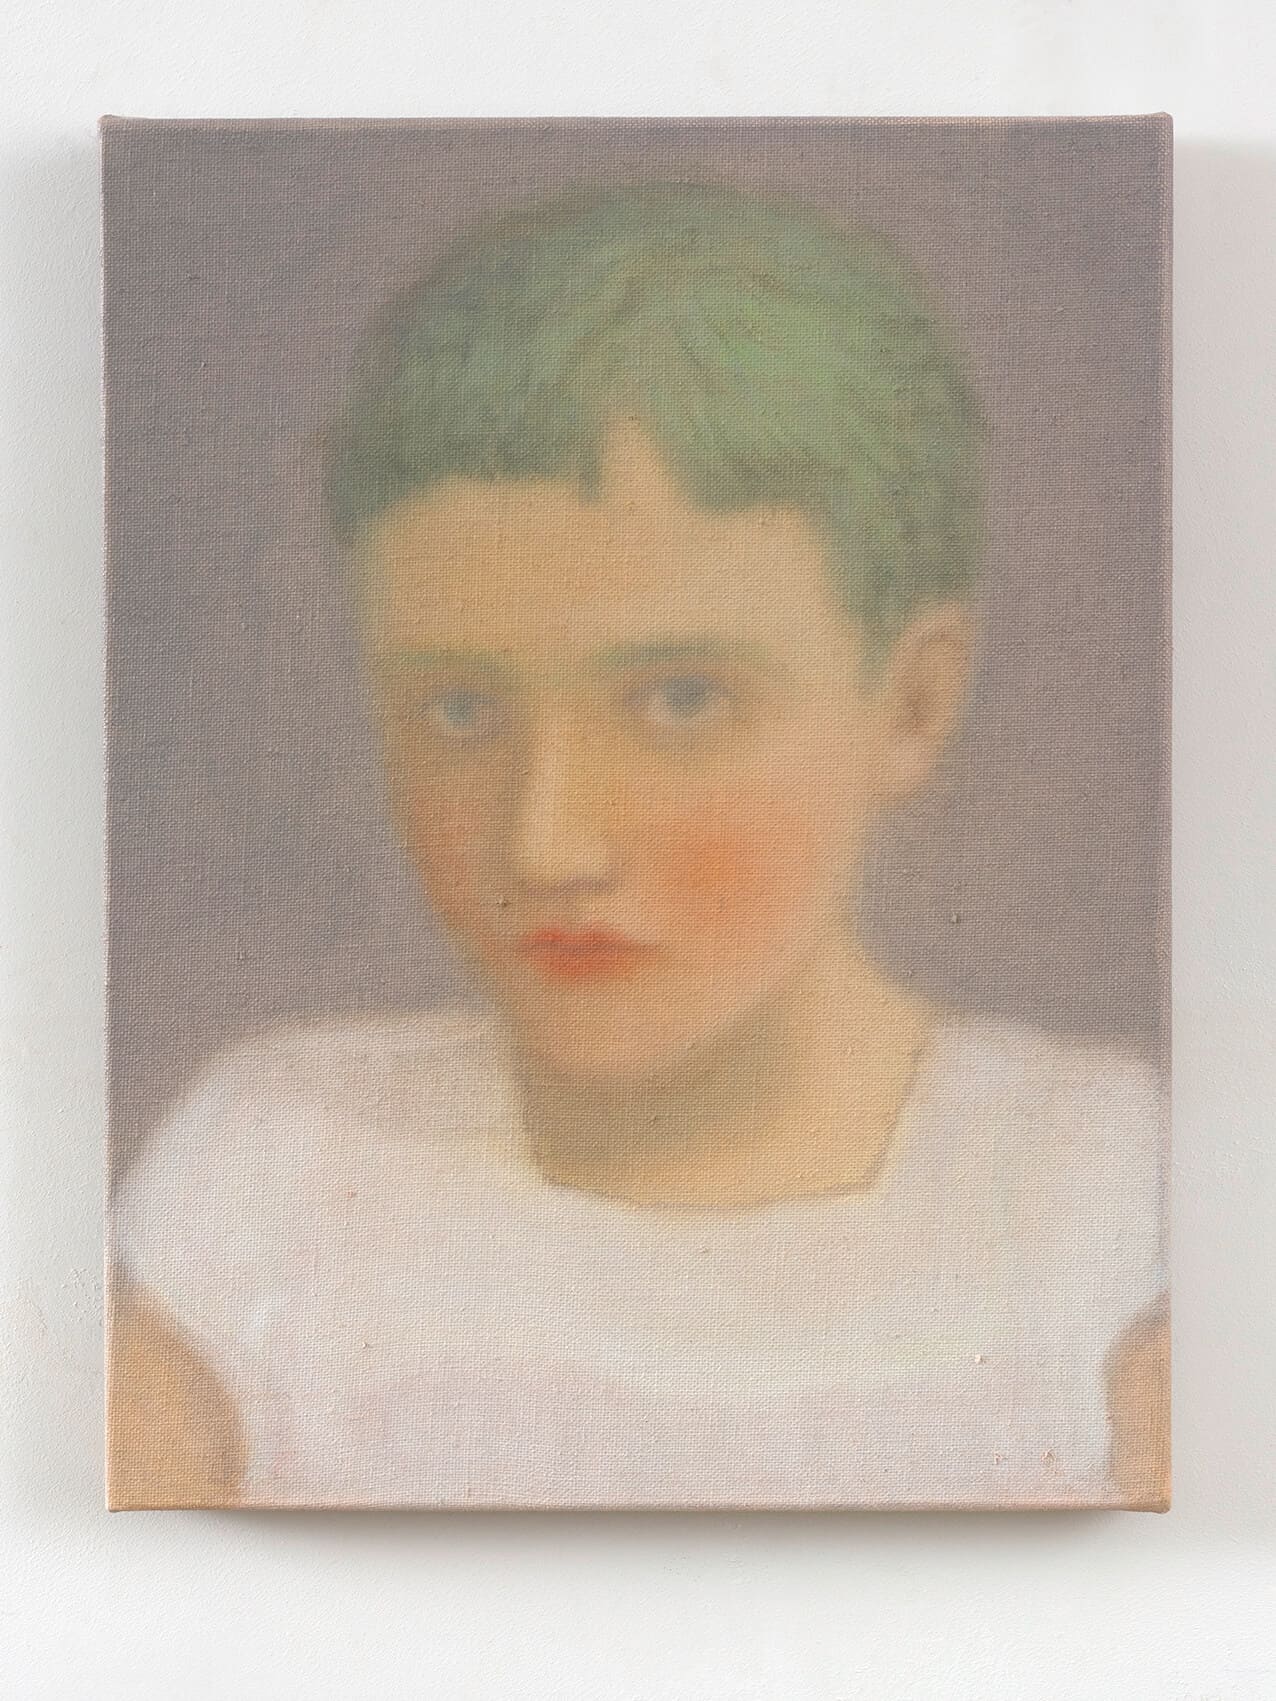 Chechu Álava, Rebel Kid, 2019. Oil on Canvas, 35 x 27cm. Courtesy of the artist & SMAC Gallery.